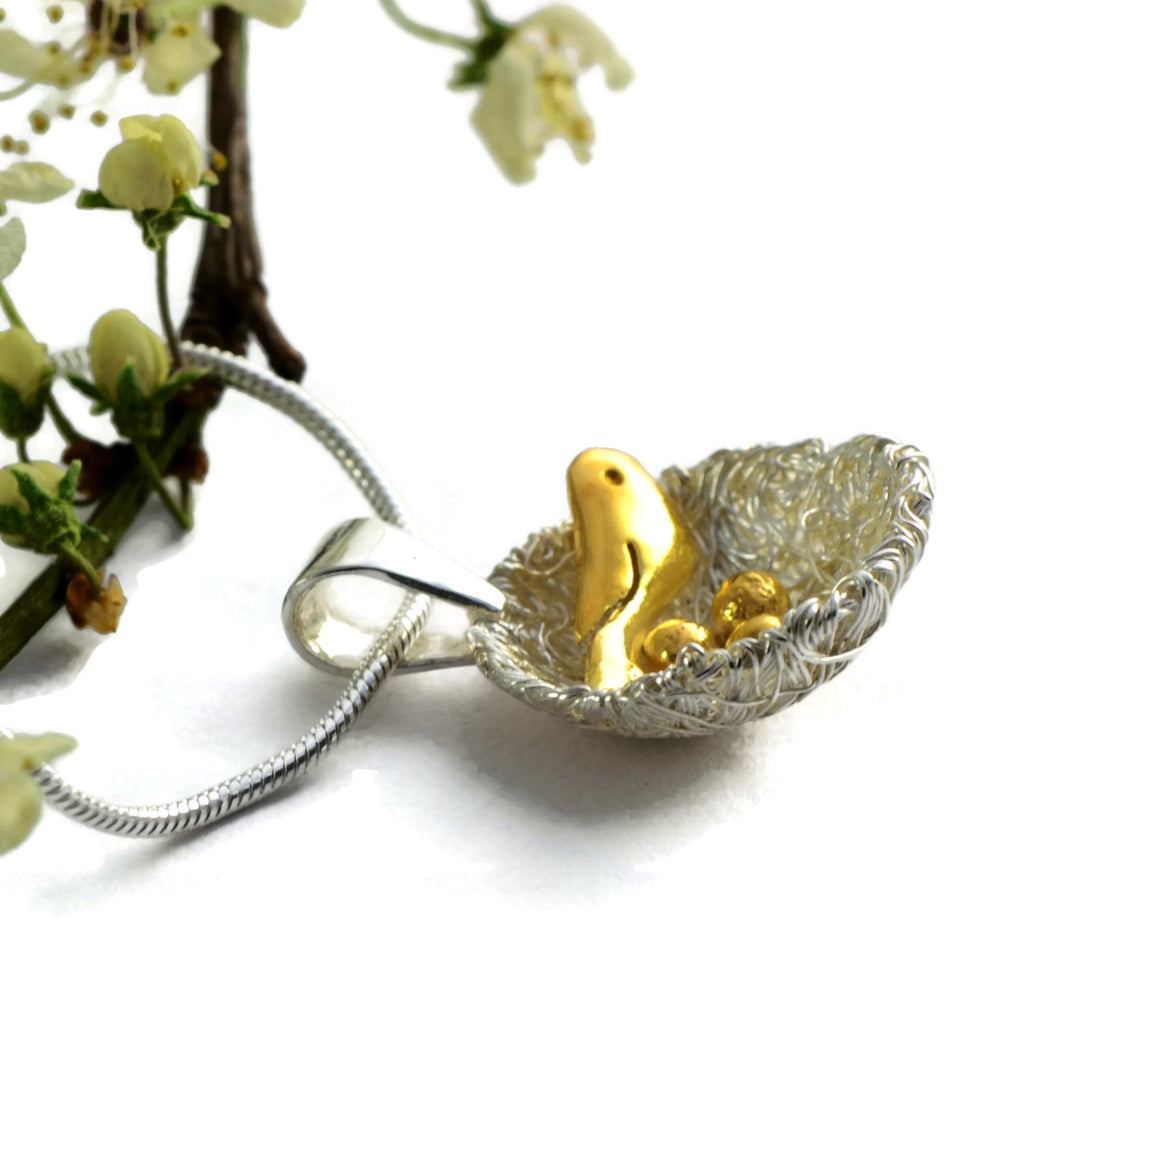 Bird's nest pendant with golden bird and eggs